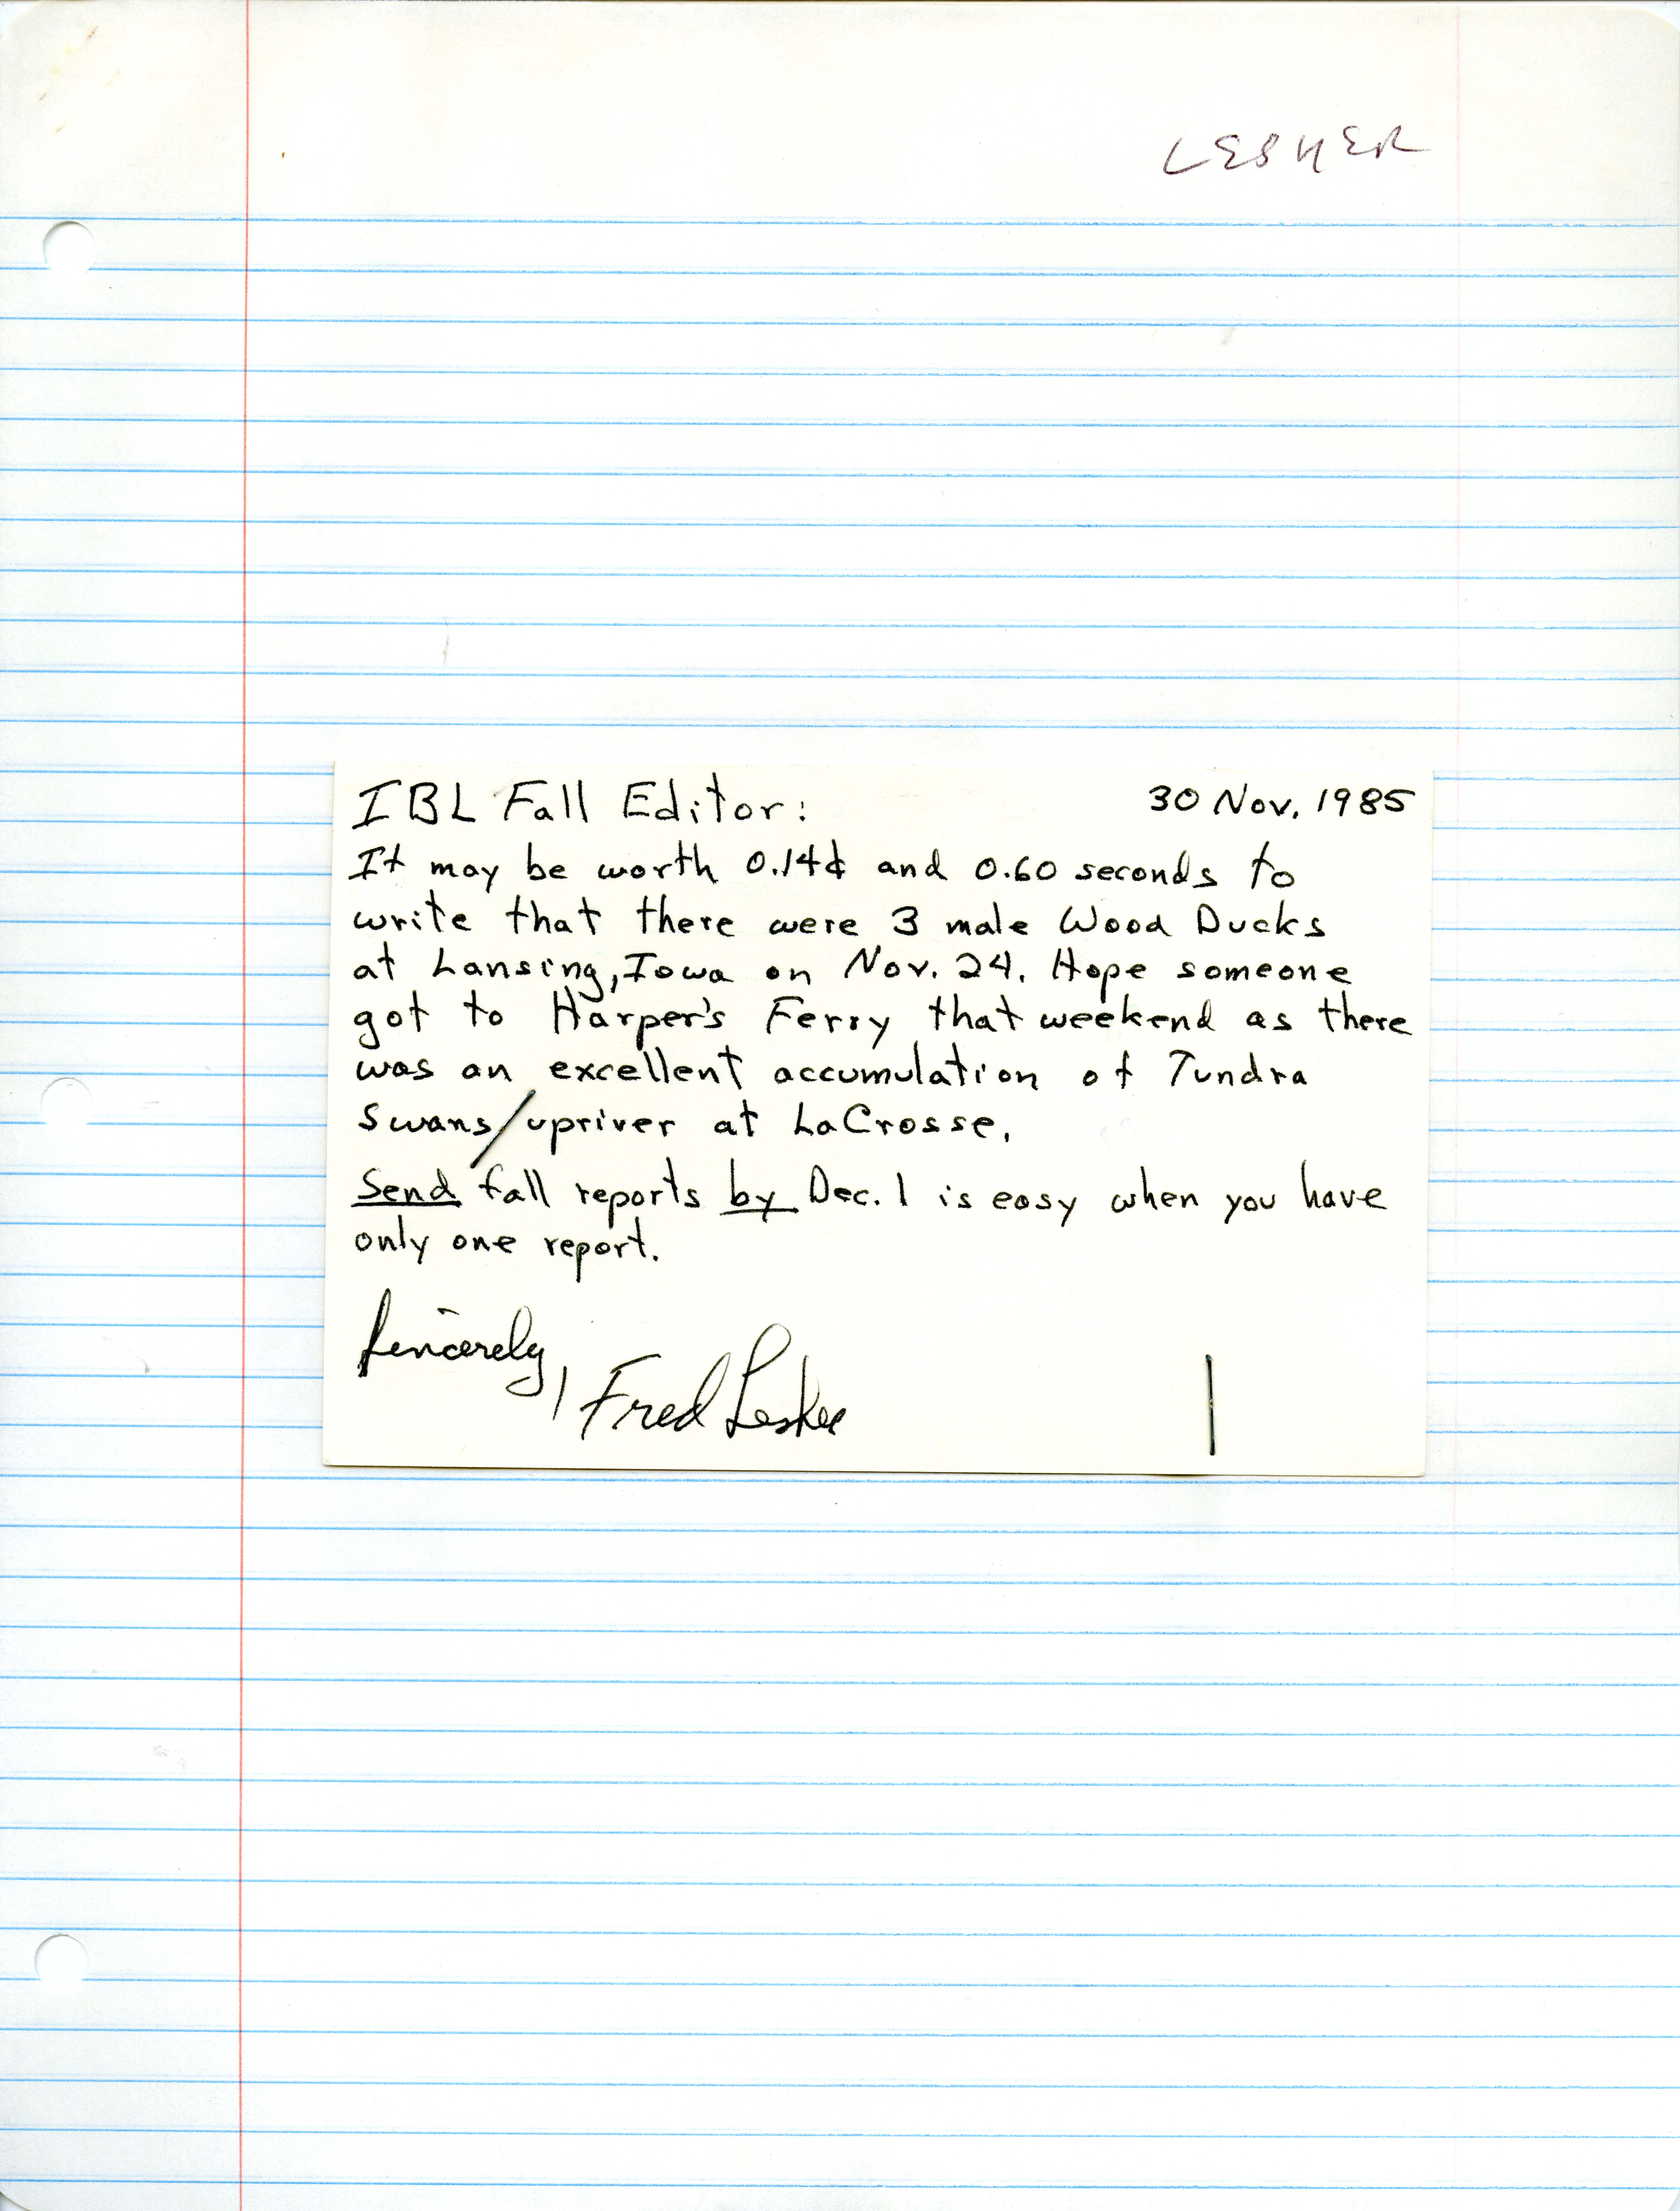 Fred Lesher letter to Thomas Kent regarding Wood Duck sighting, November 30, 1985